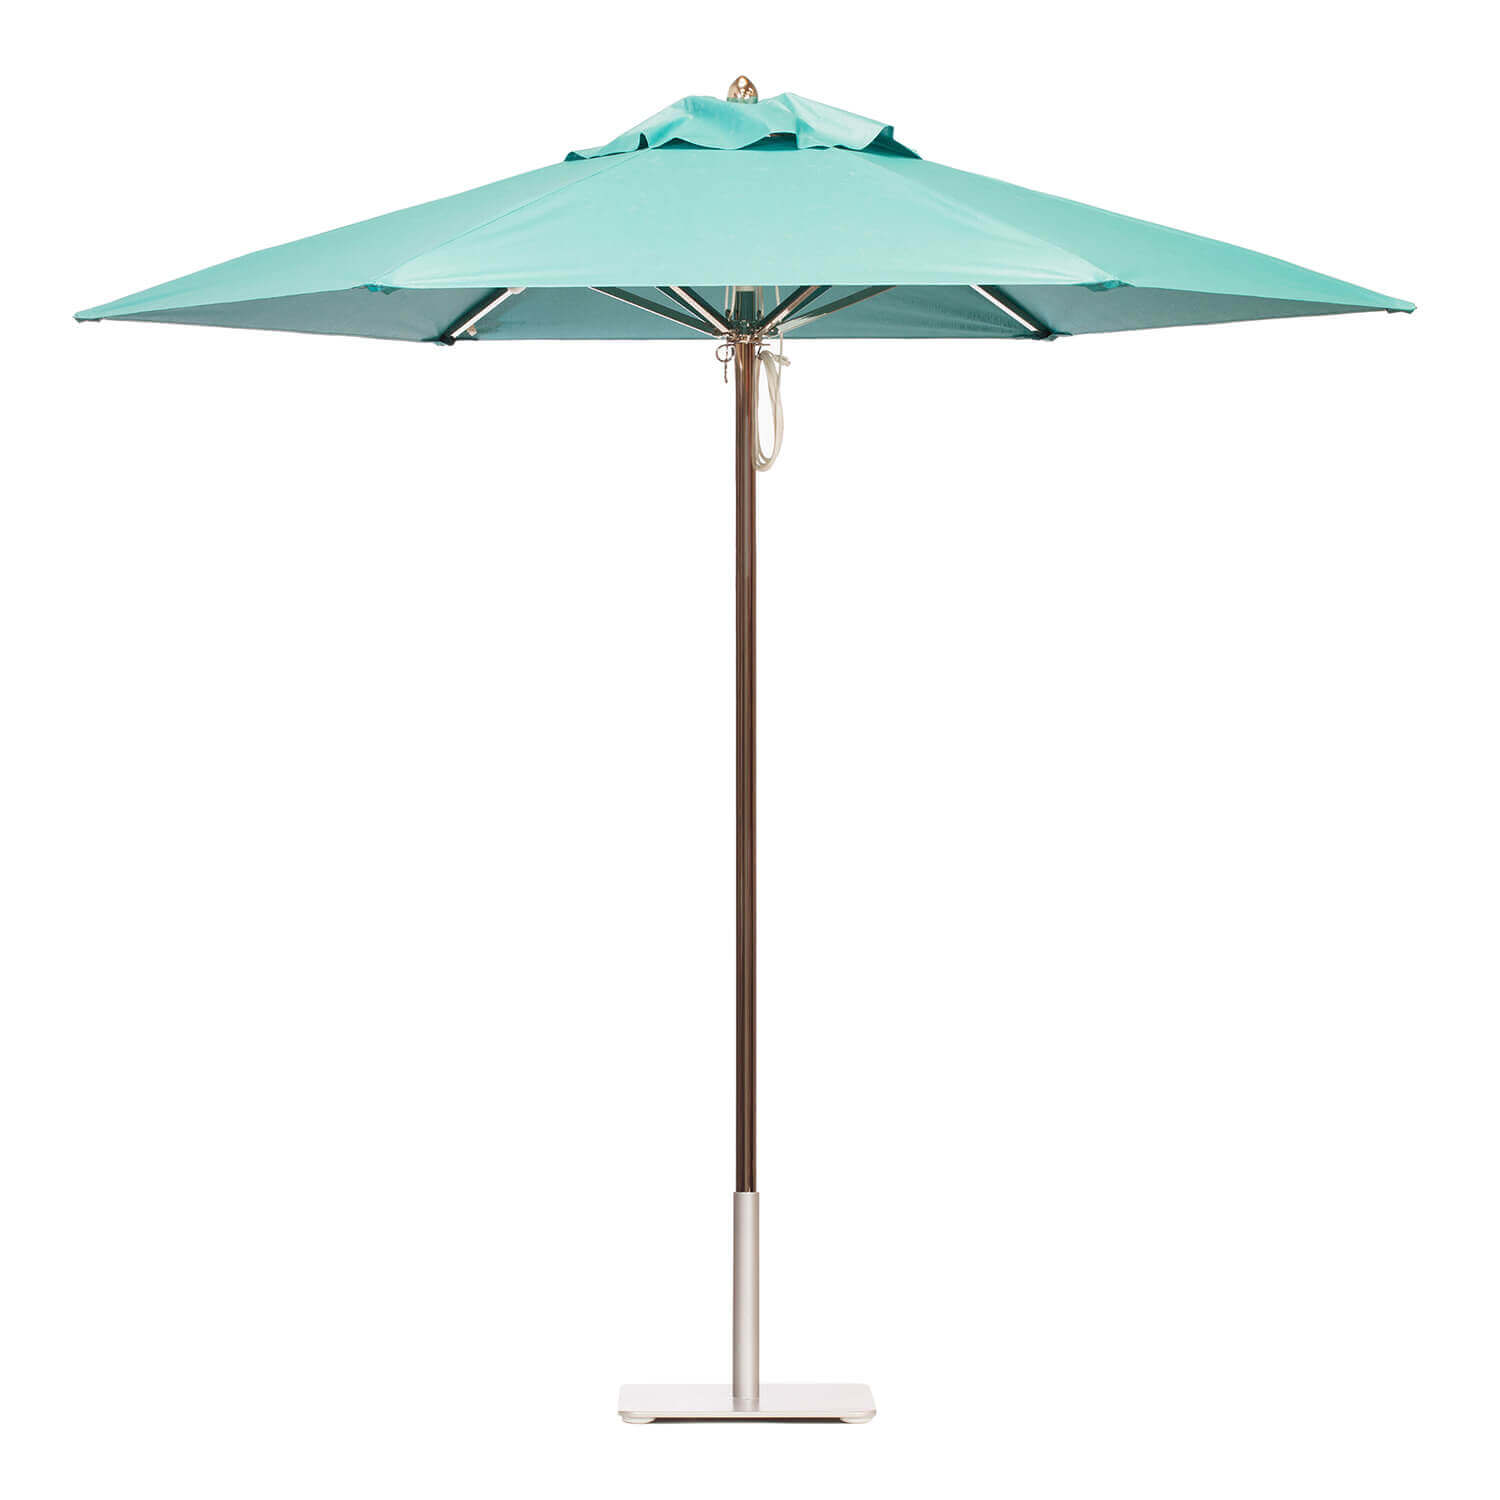 Intense Turquoise Mesh Umbrella Image